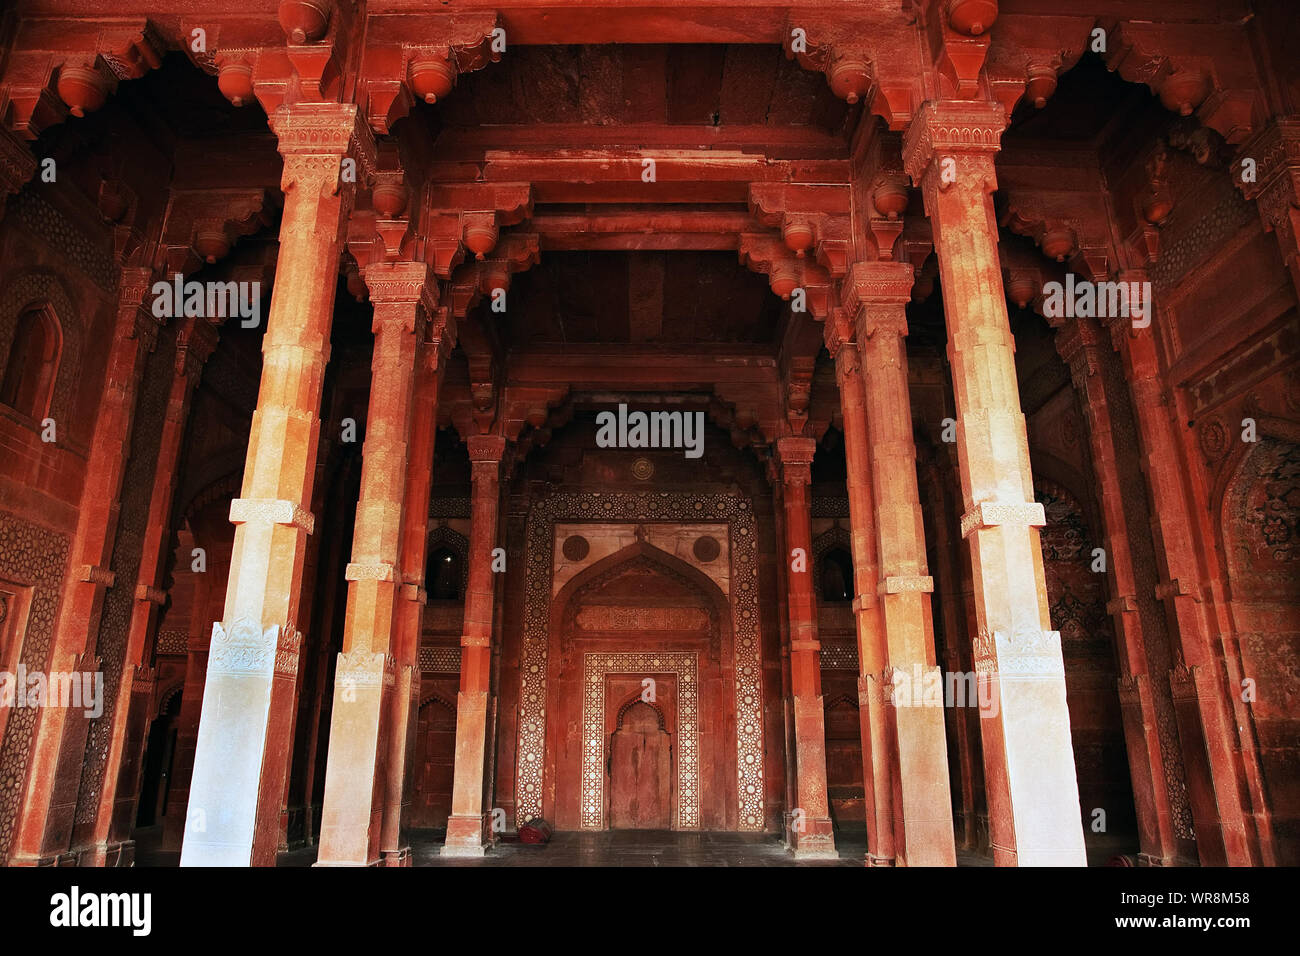 Architectural Column At Jama Masjid Stock Photo